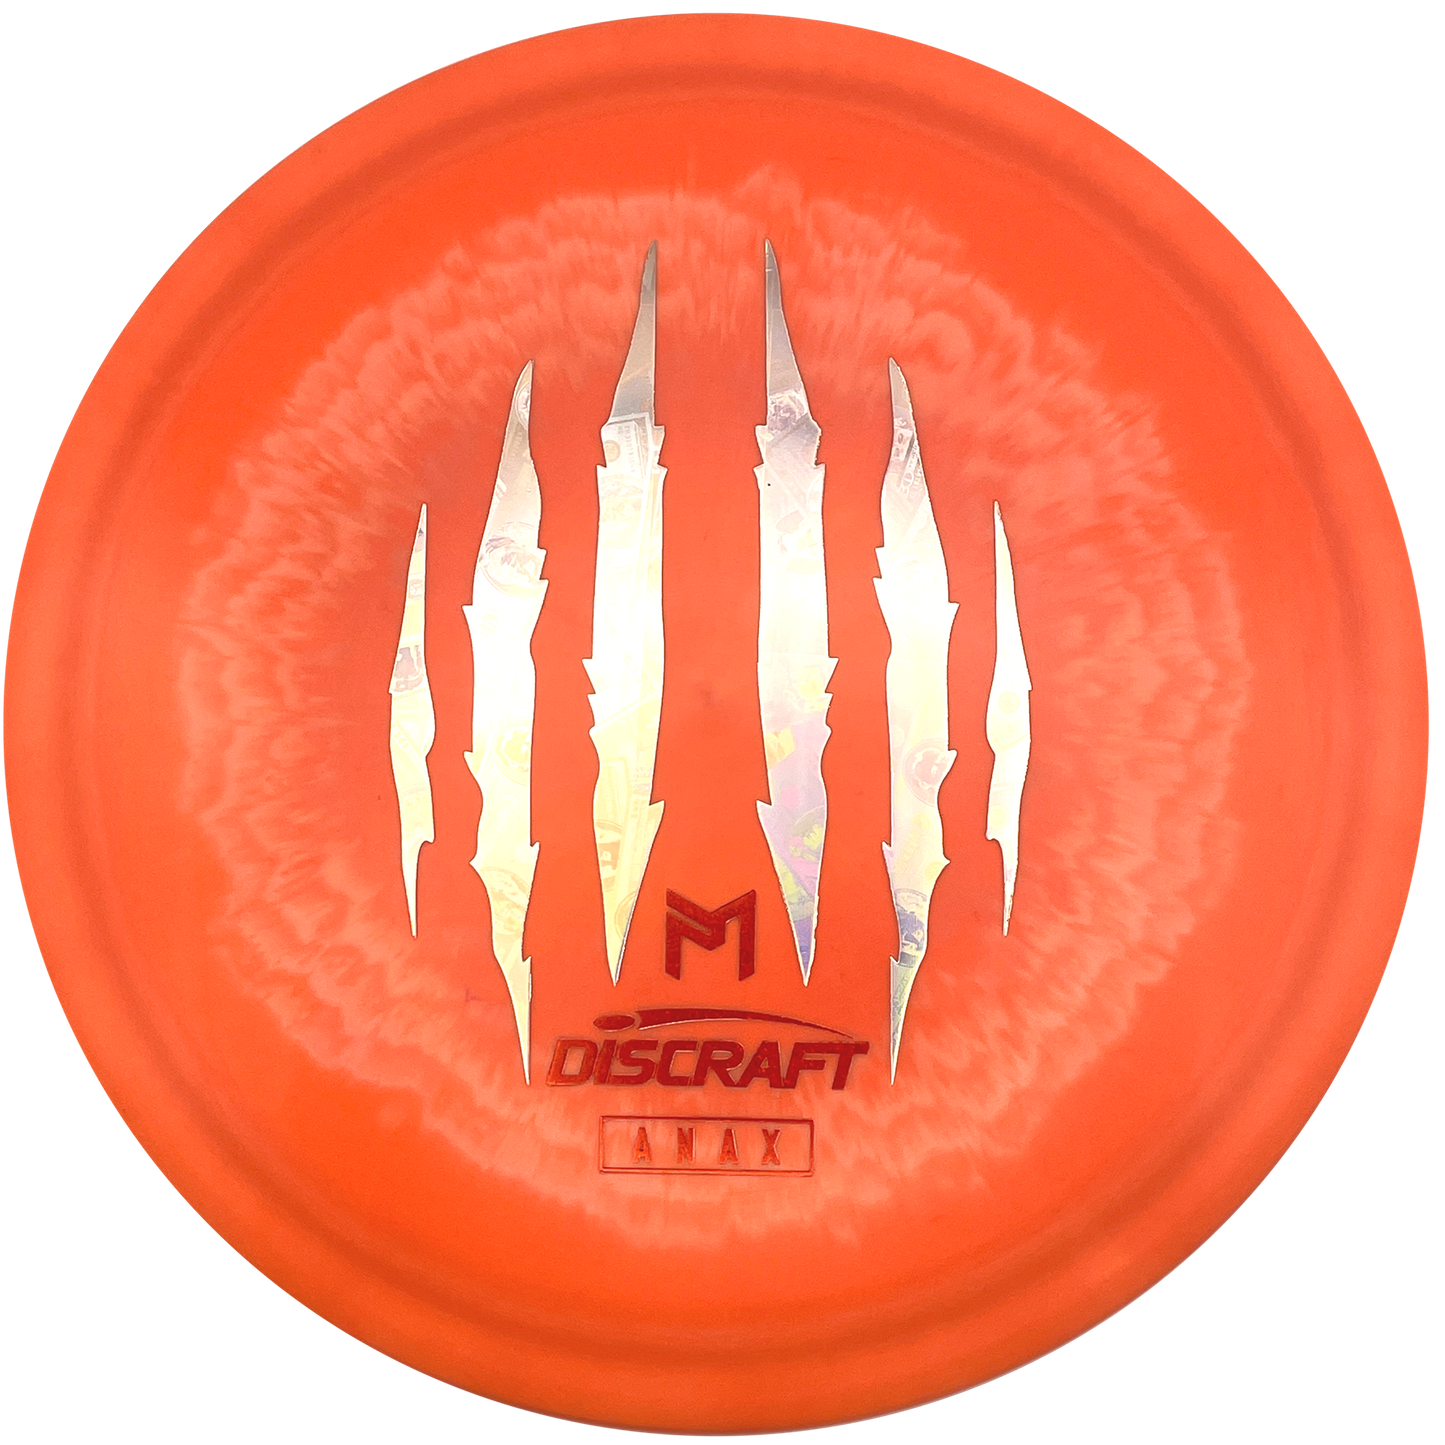 Discraft Anax - 6x Paul McBeth - ESP - Swirly Orange